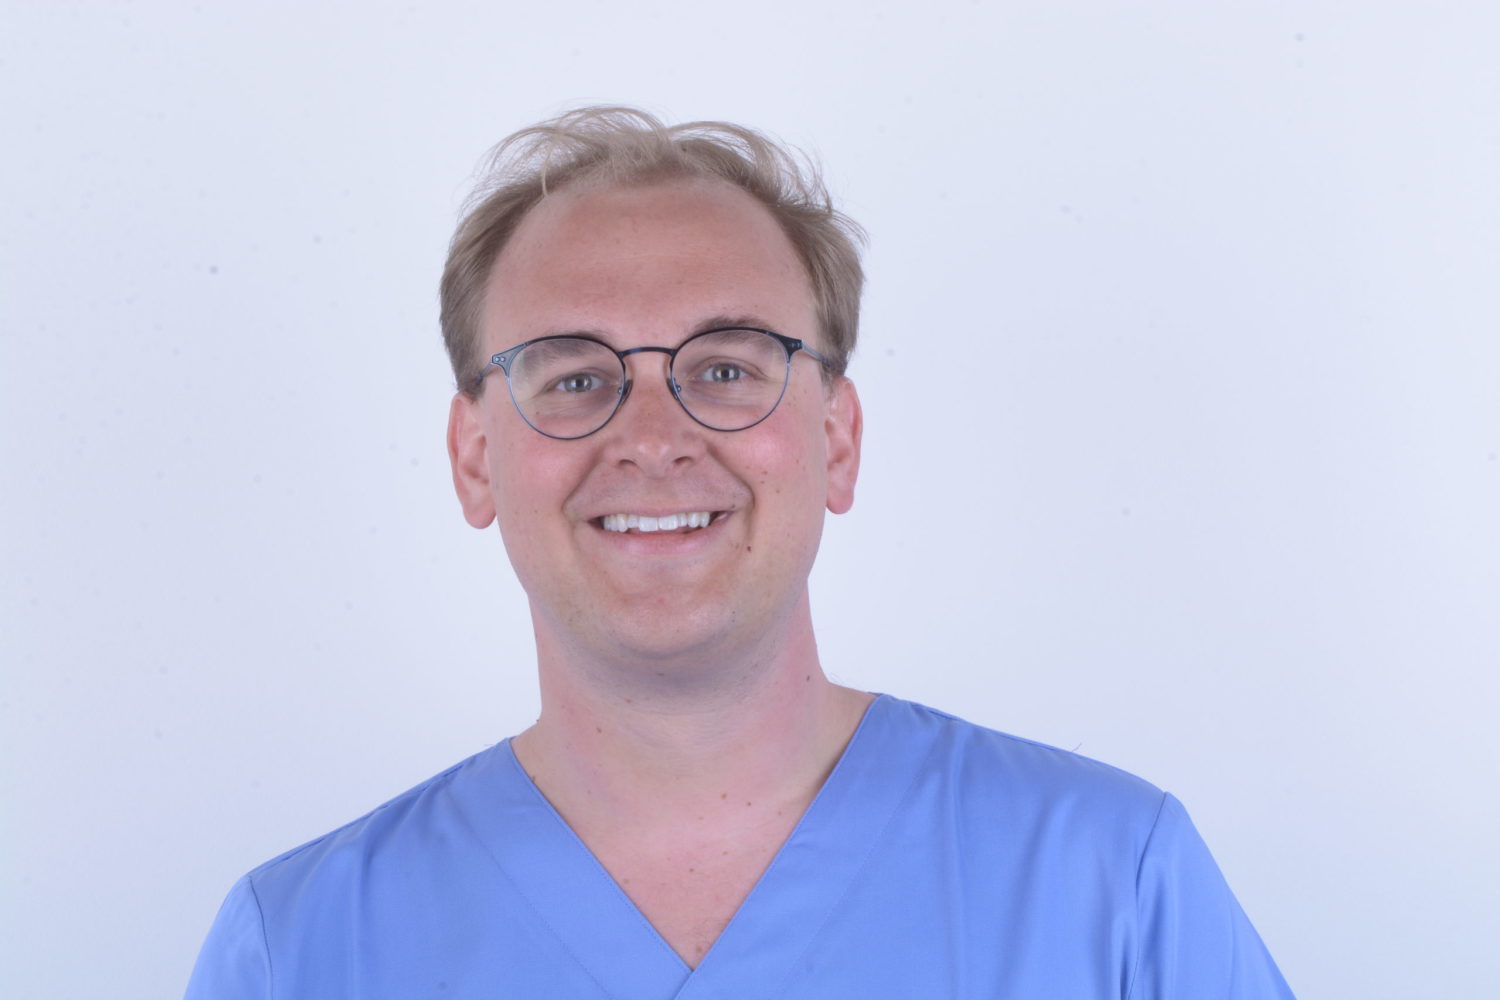 Dr Marin Pomperski - chirurgien dentsite - Paris 8e 16e 17e arrondissements